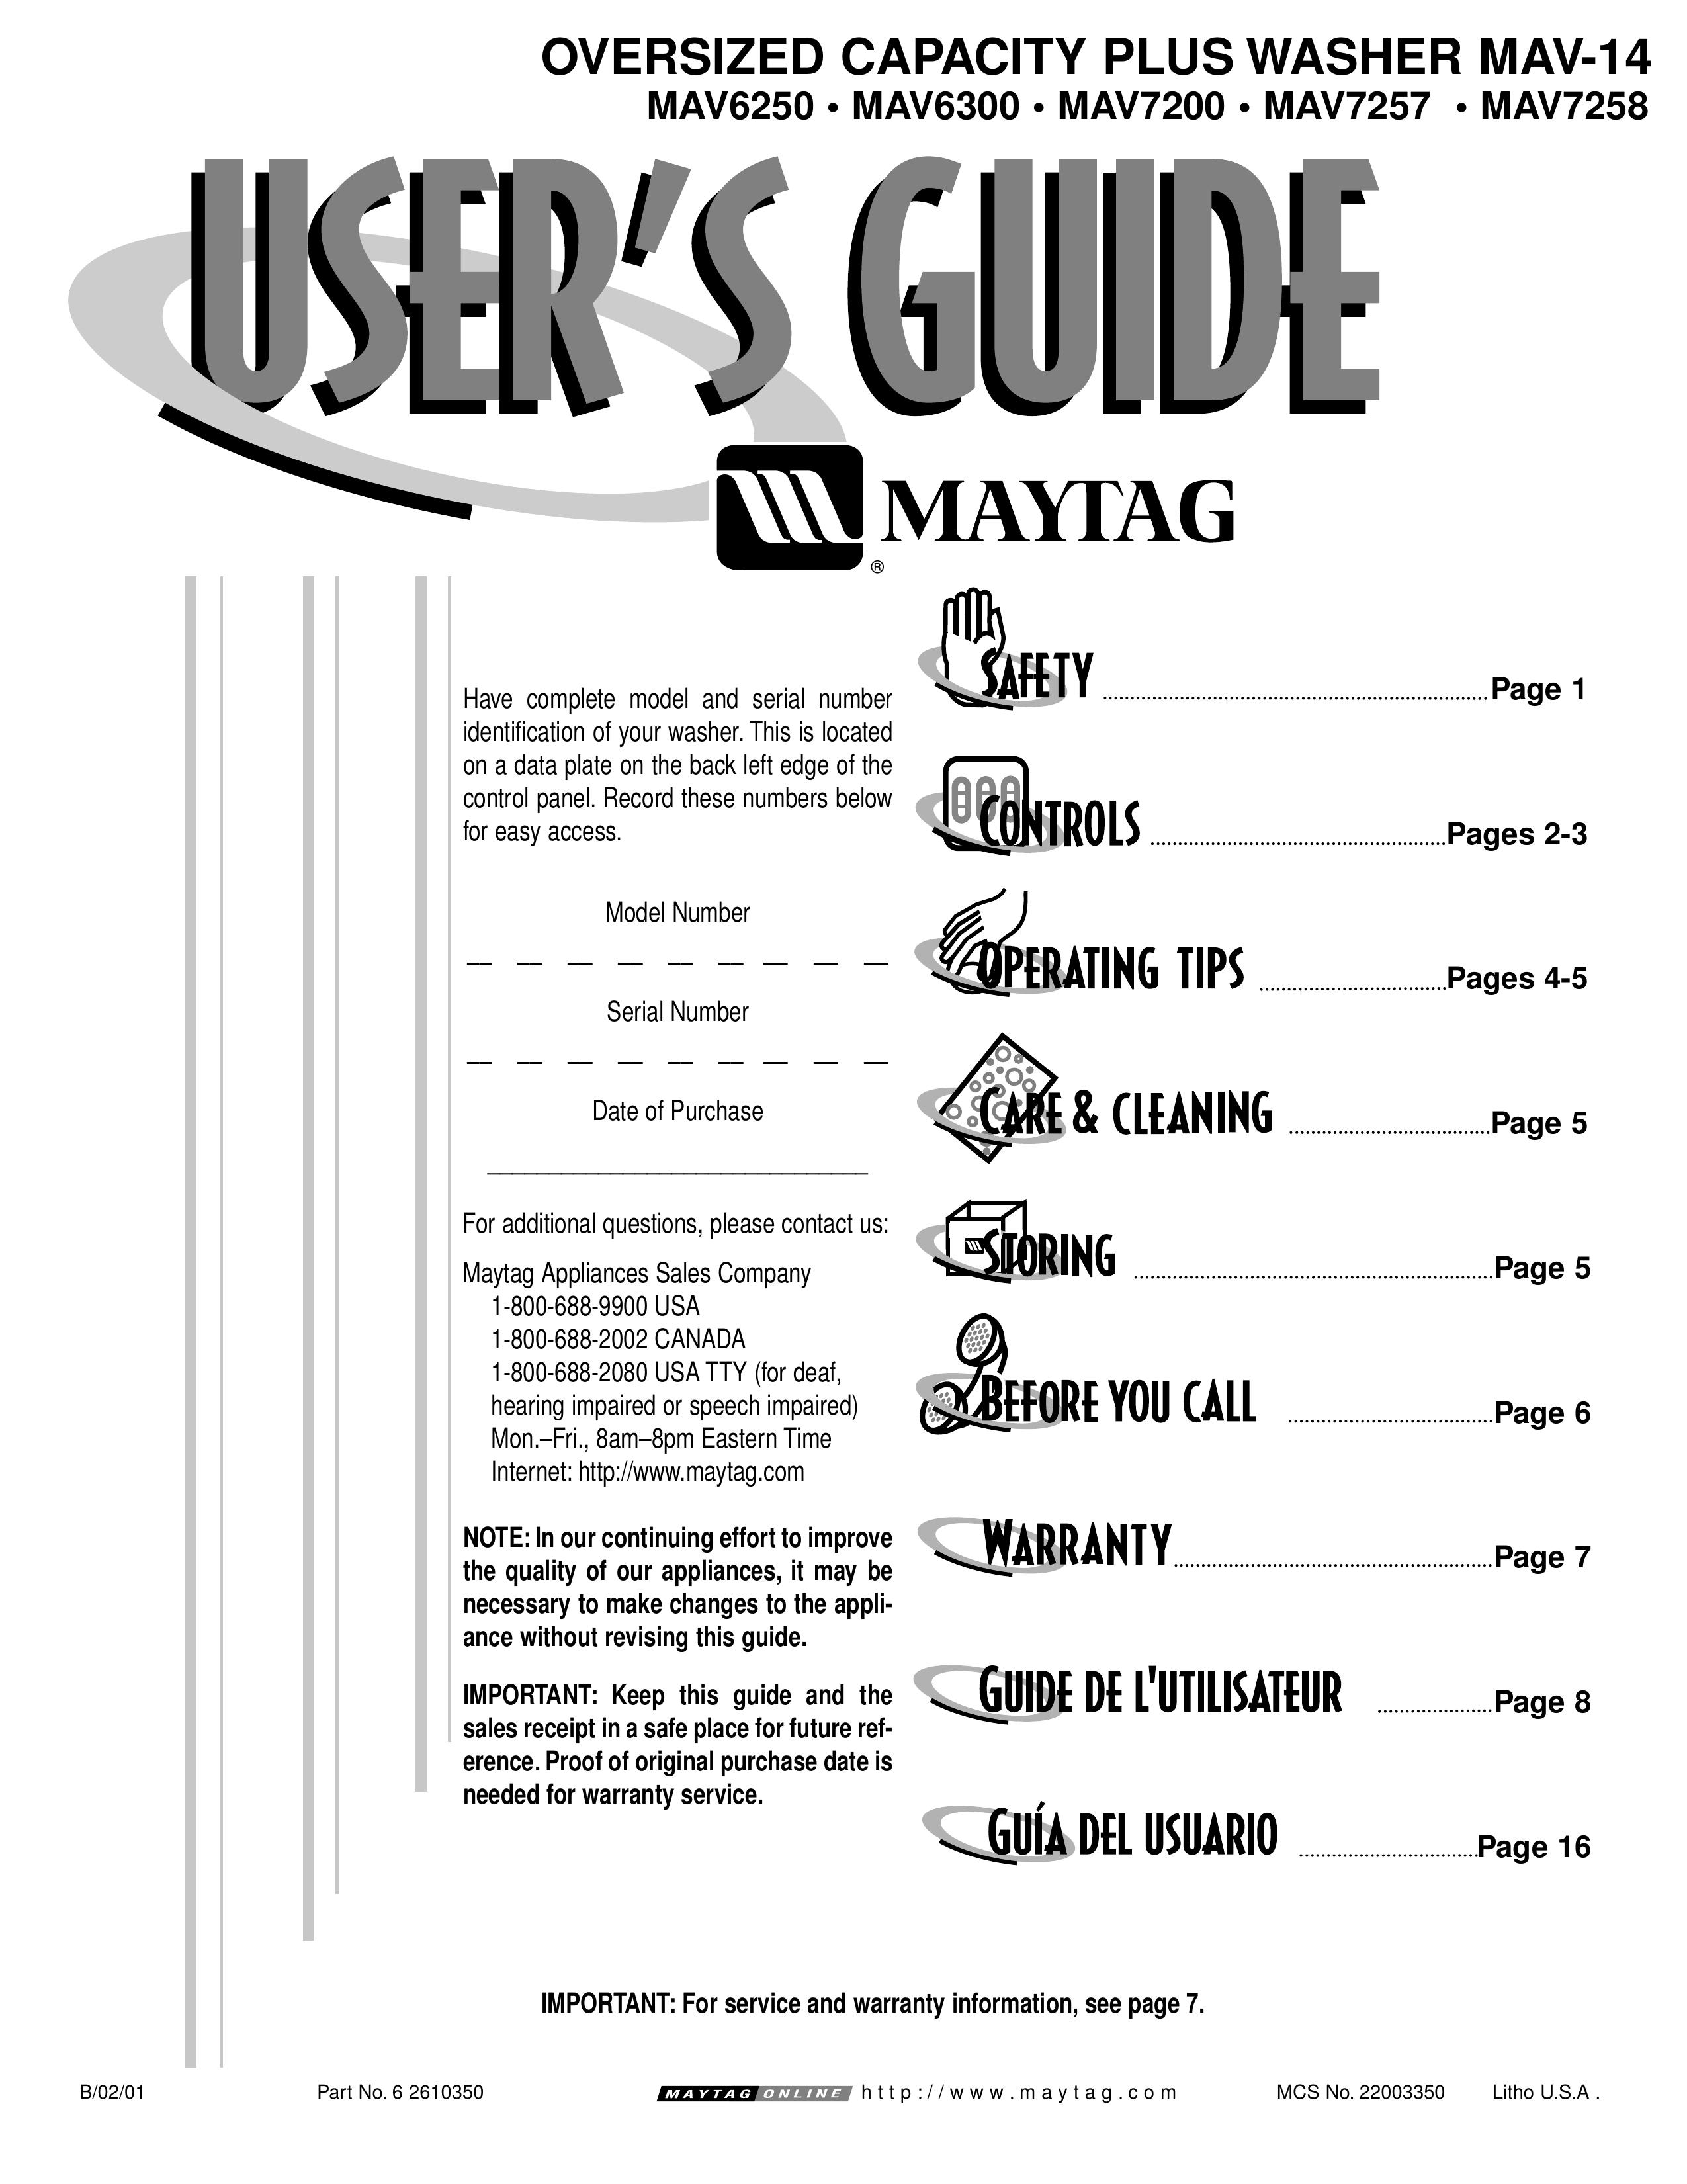 Maytag MAV7258 Washer/Dryer User Manual